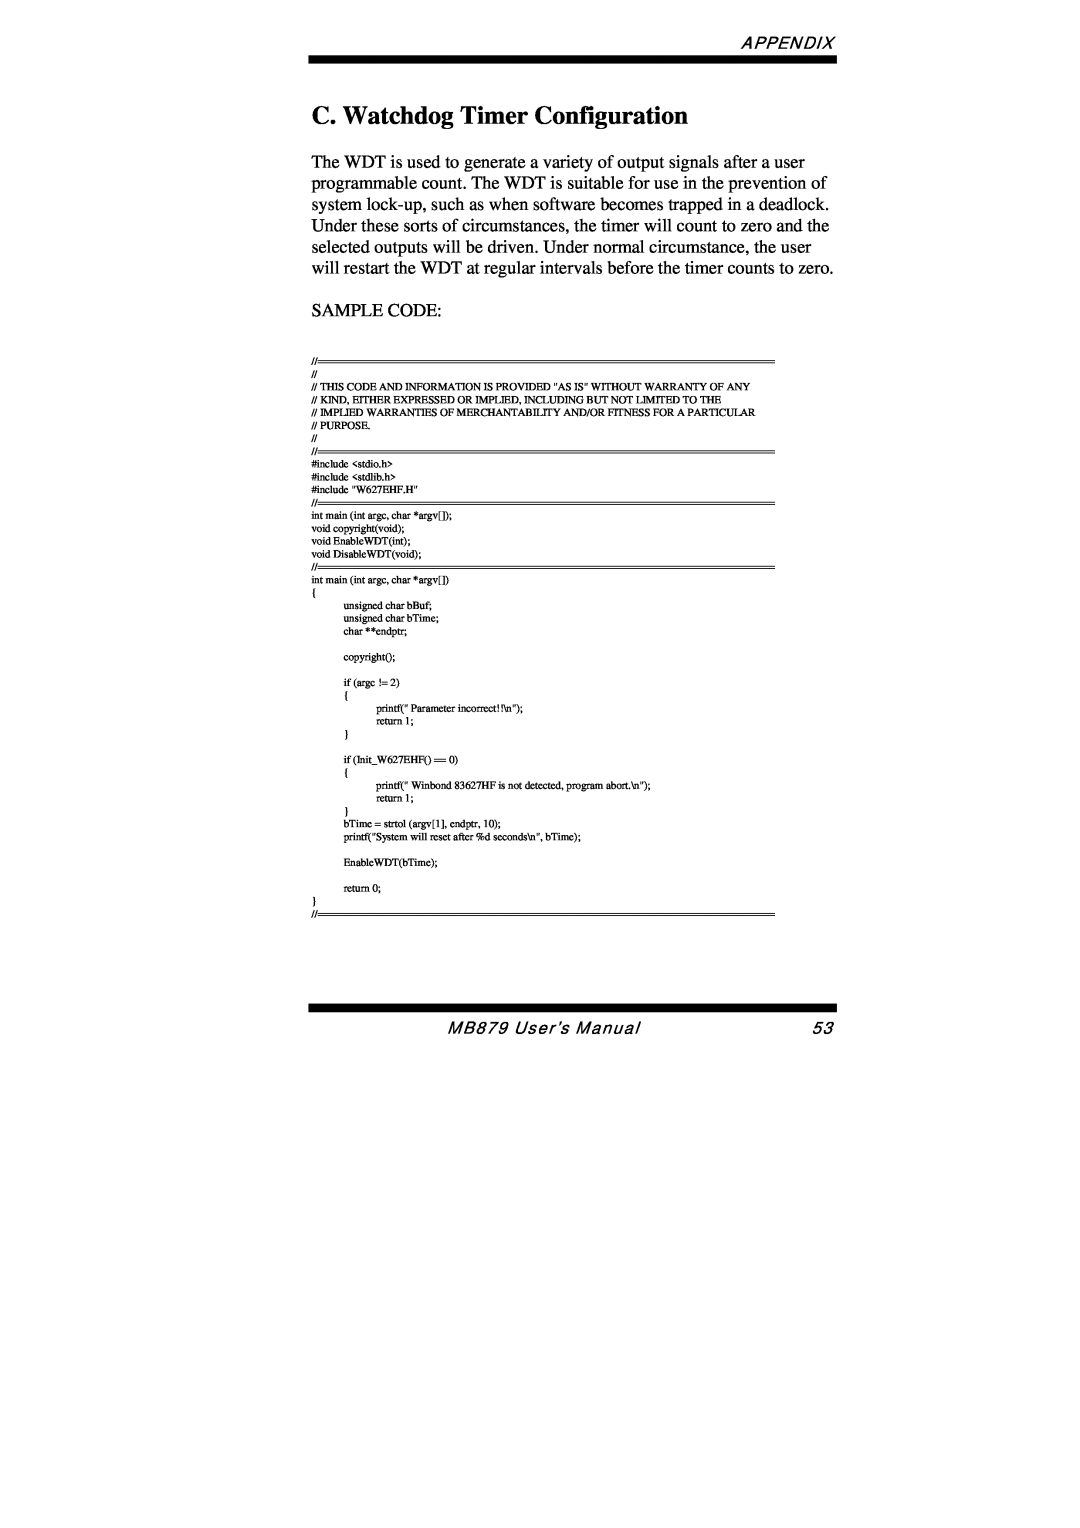 Intel user manual C. Watchdog Timer Configuration, Sample Code, Appendix, MB879 User’s Manual 